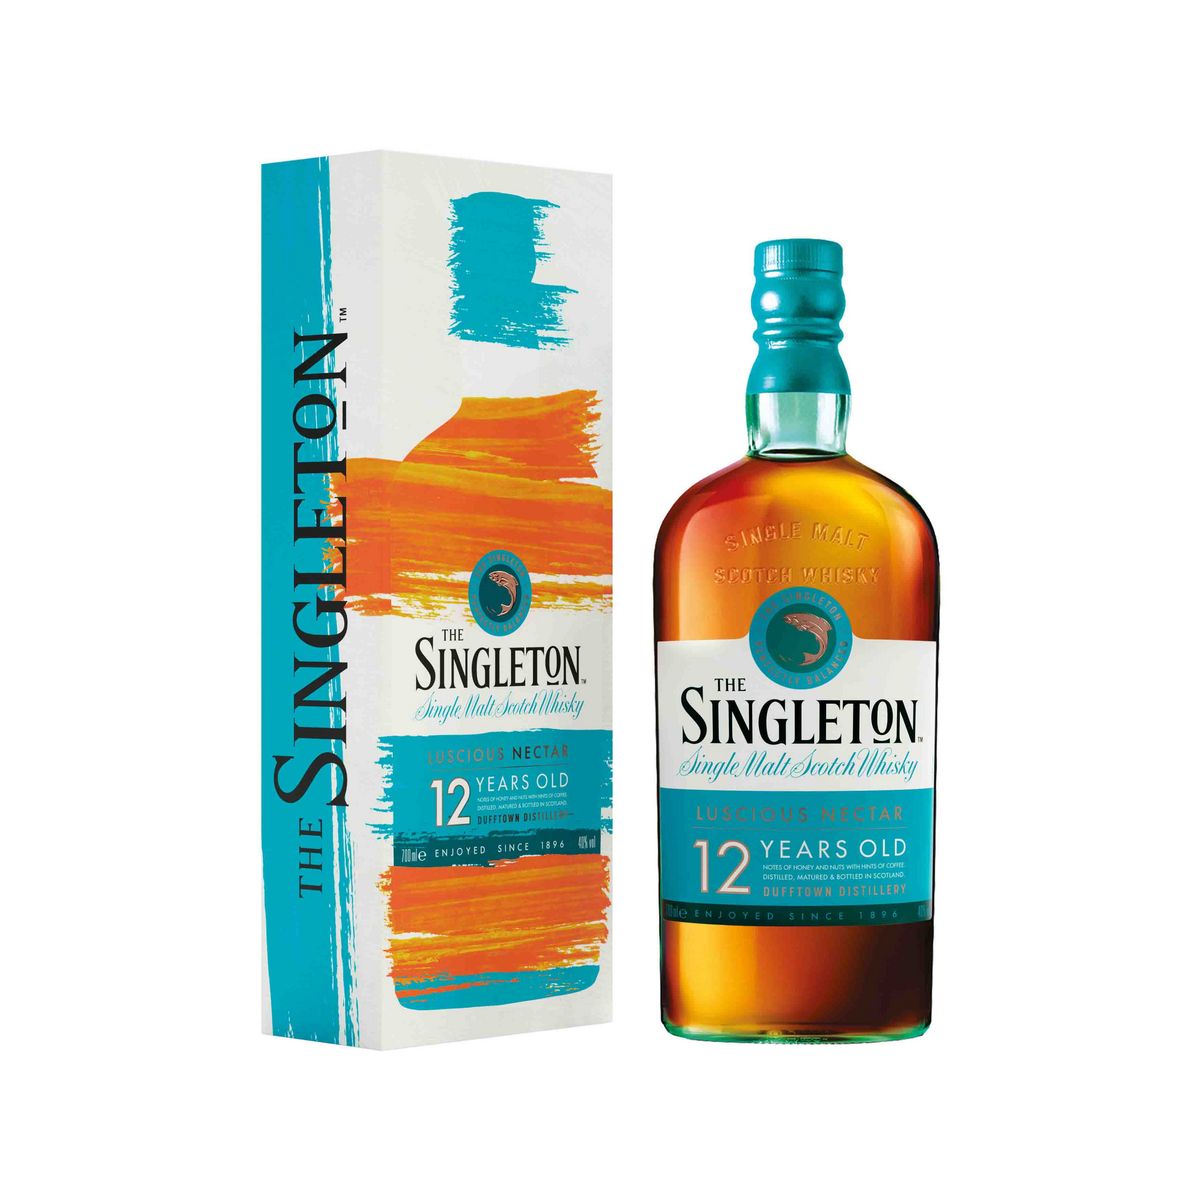 SINGLETON Scotch Whisky Luscious nectar single malt 40% 12ans avec étui 70cl